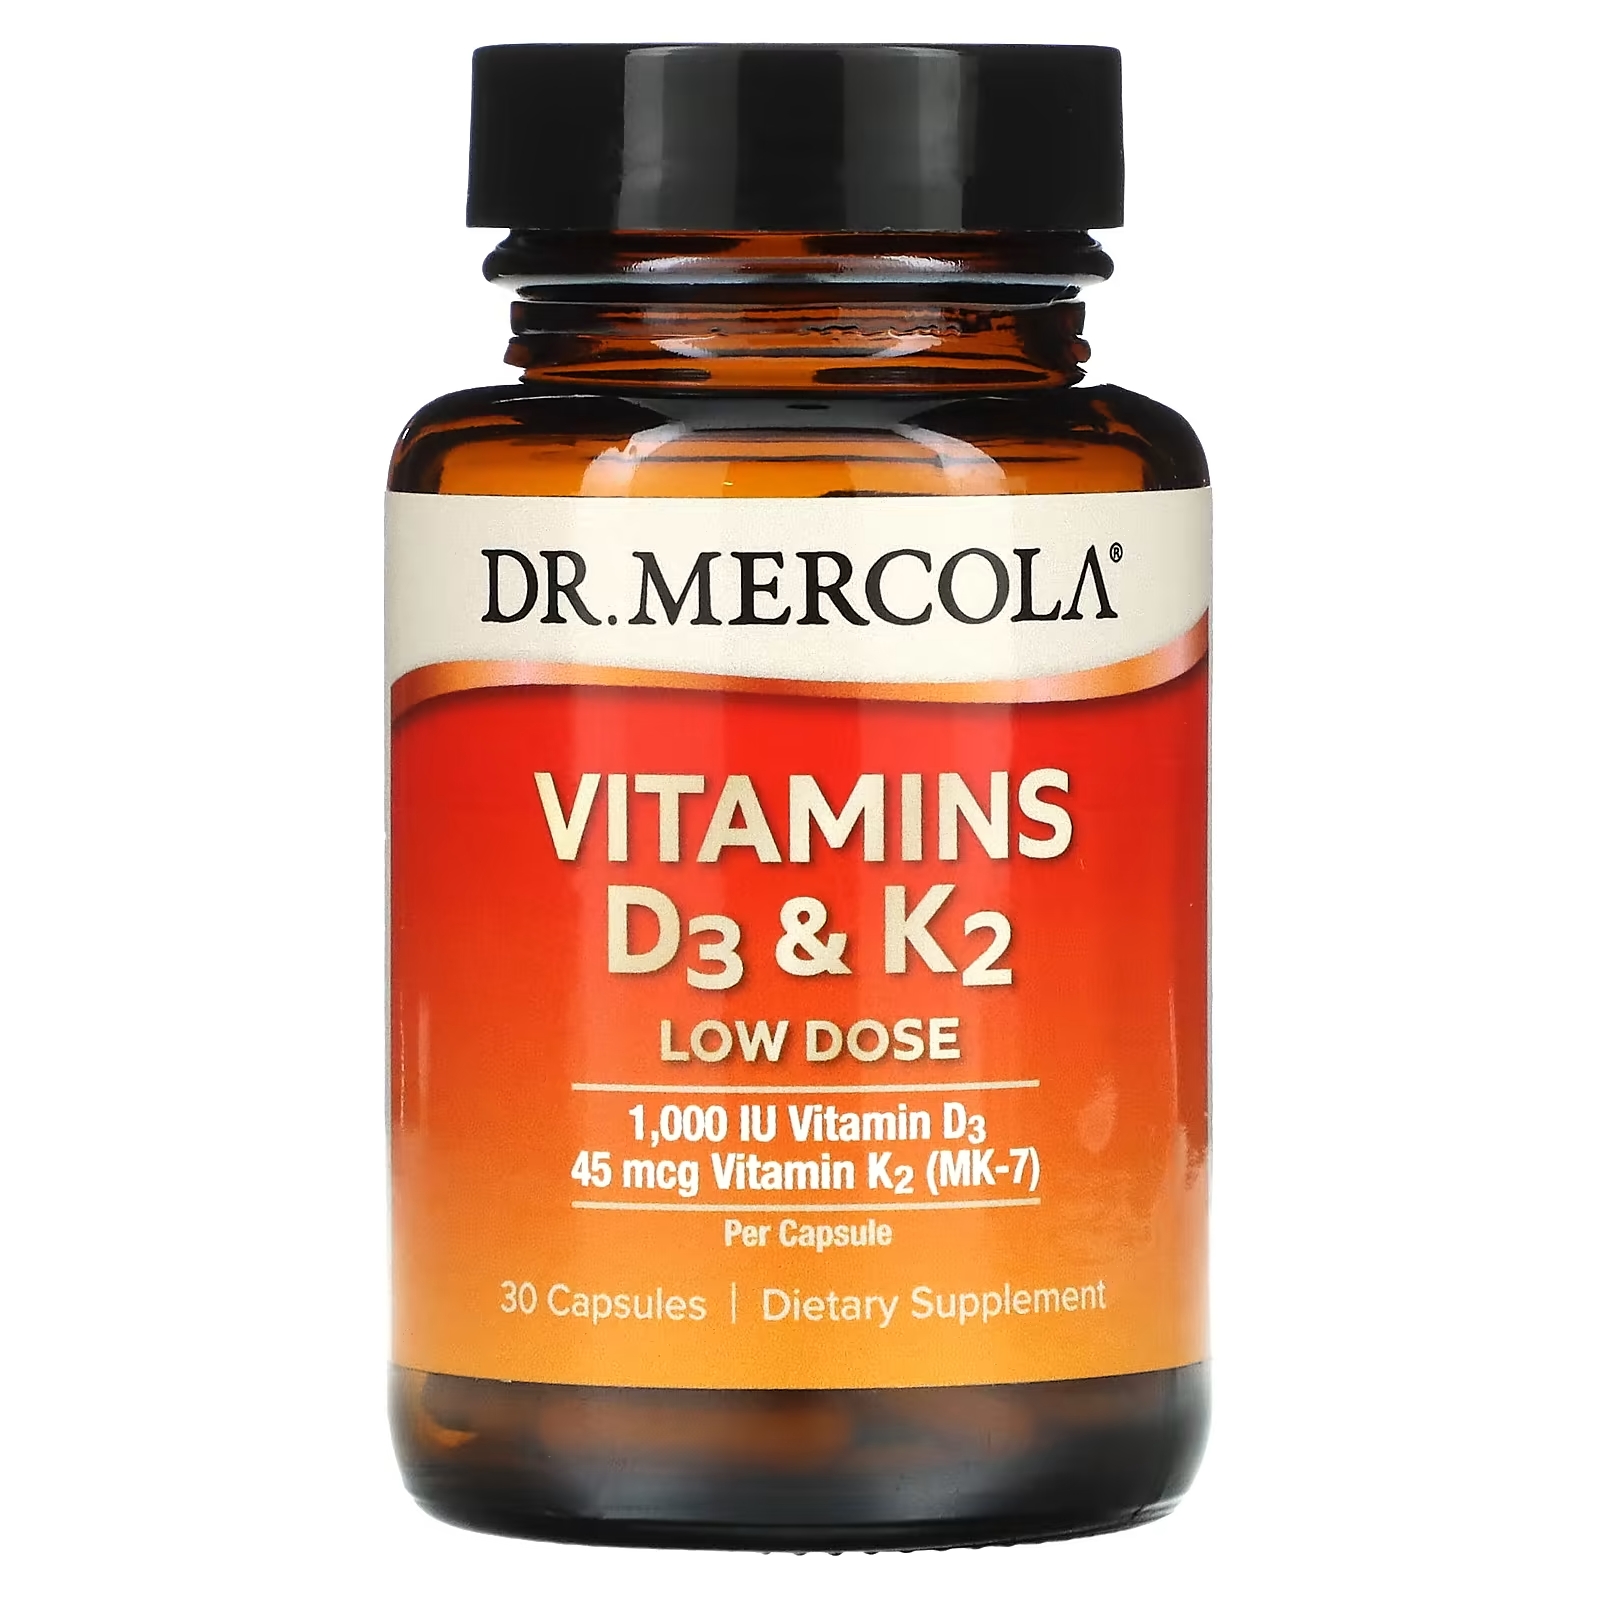 Dr. Mercola Vitamins D3 & K2 Low Dose, 30 капсул dr mercola витамины d3 и k2 30 капсул